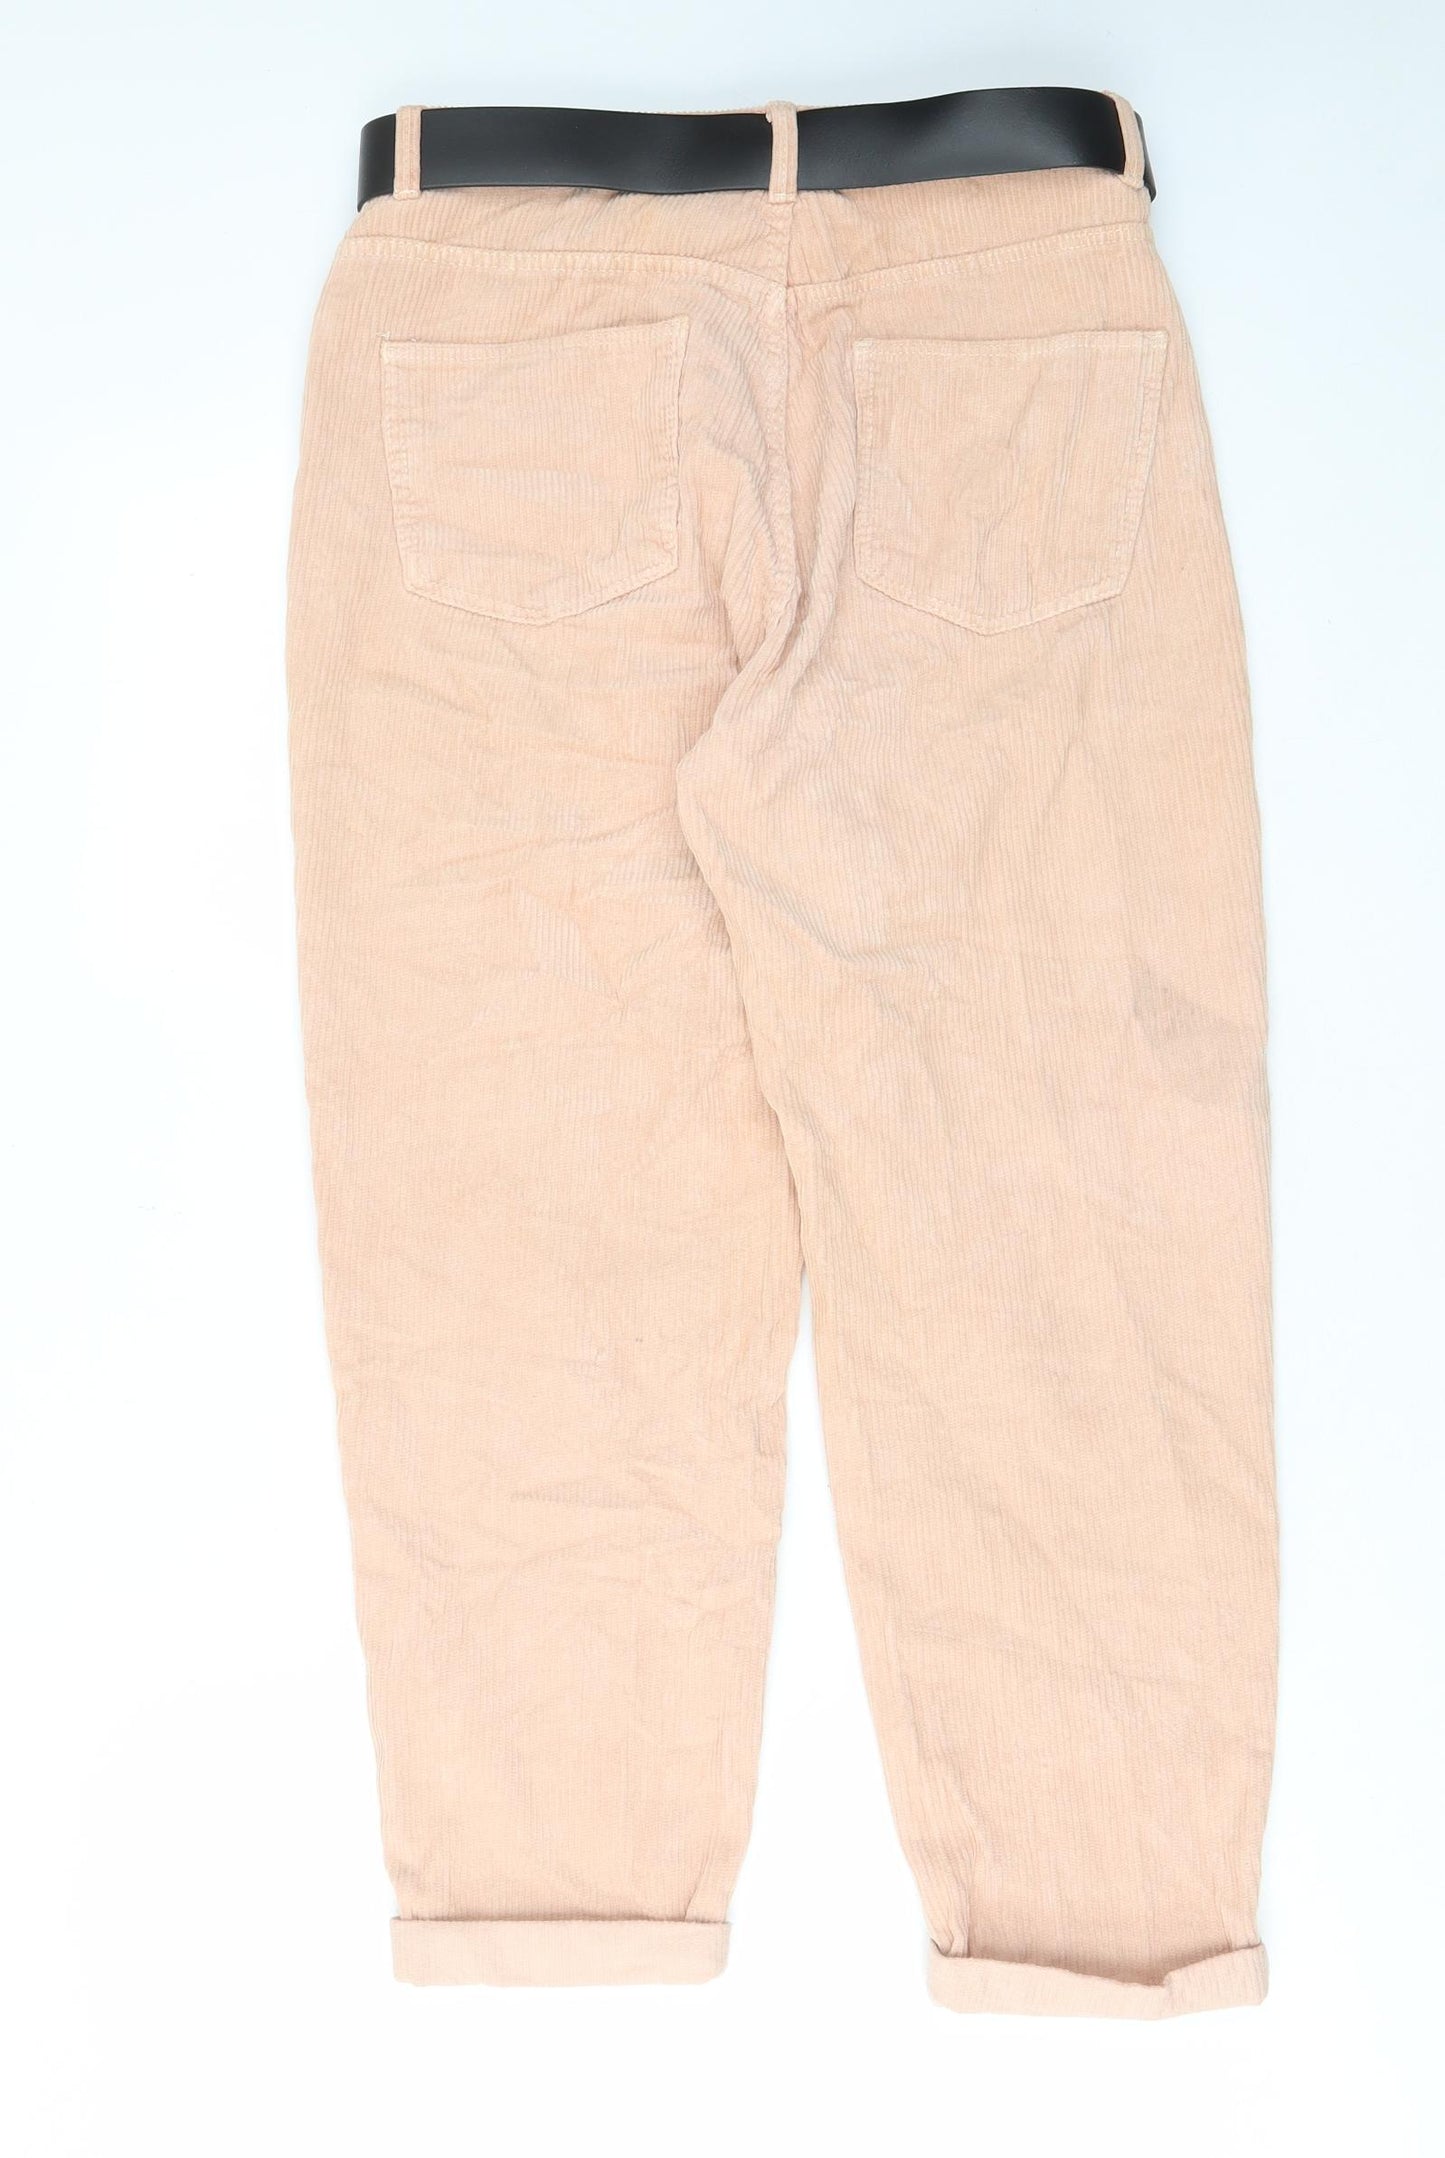 Bershka Womens Pink Cotton Trousers Size 10 L24 in Regular Zip - Pockets, Belt